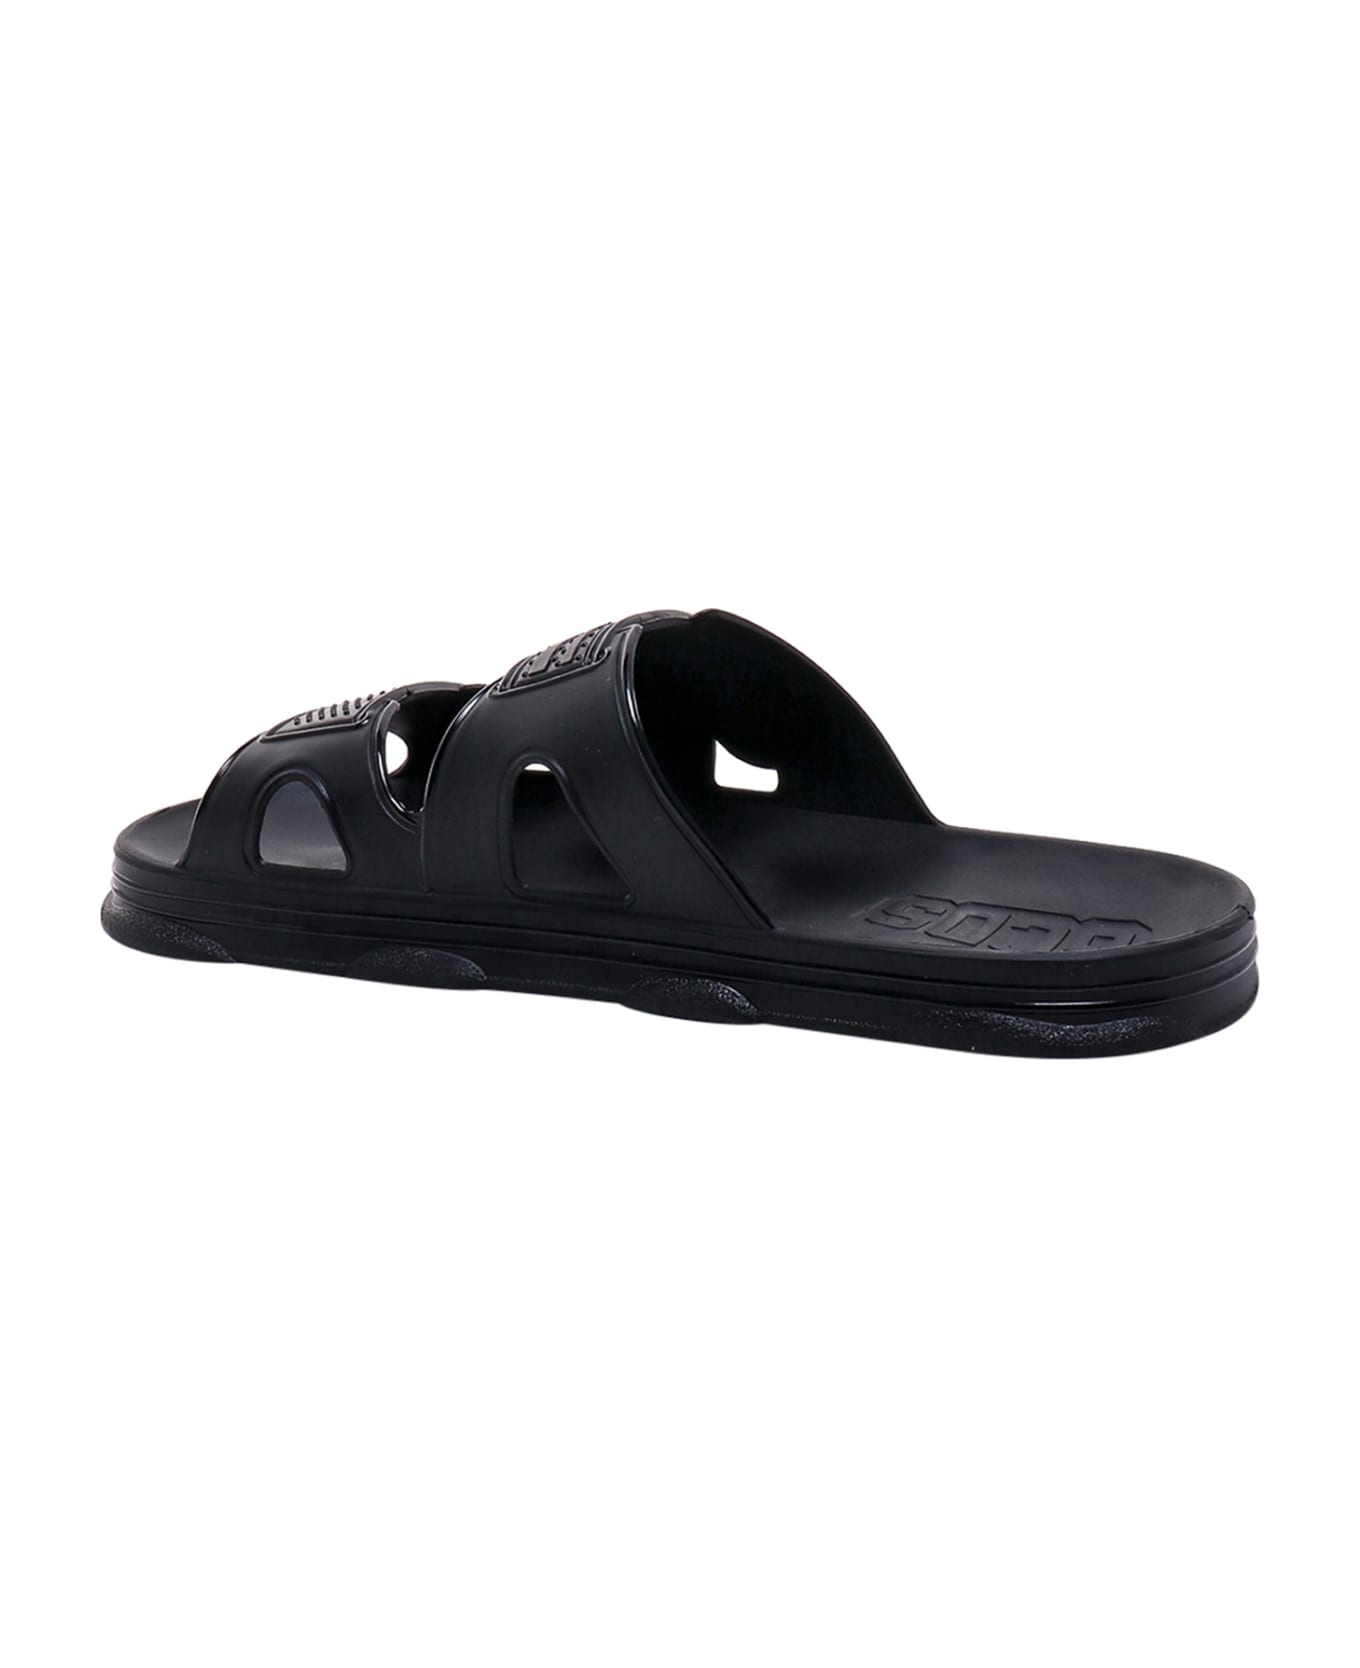 GCDS Sandals - Black